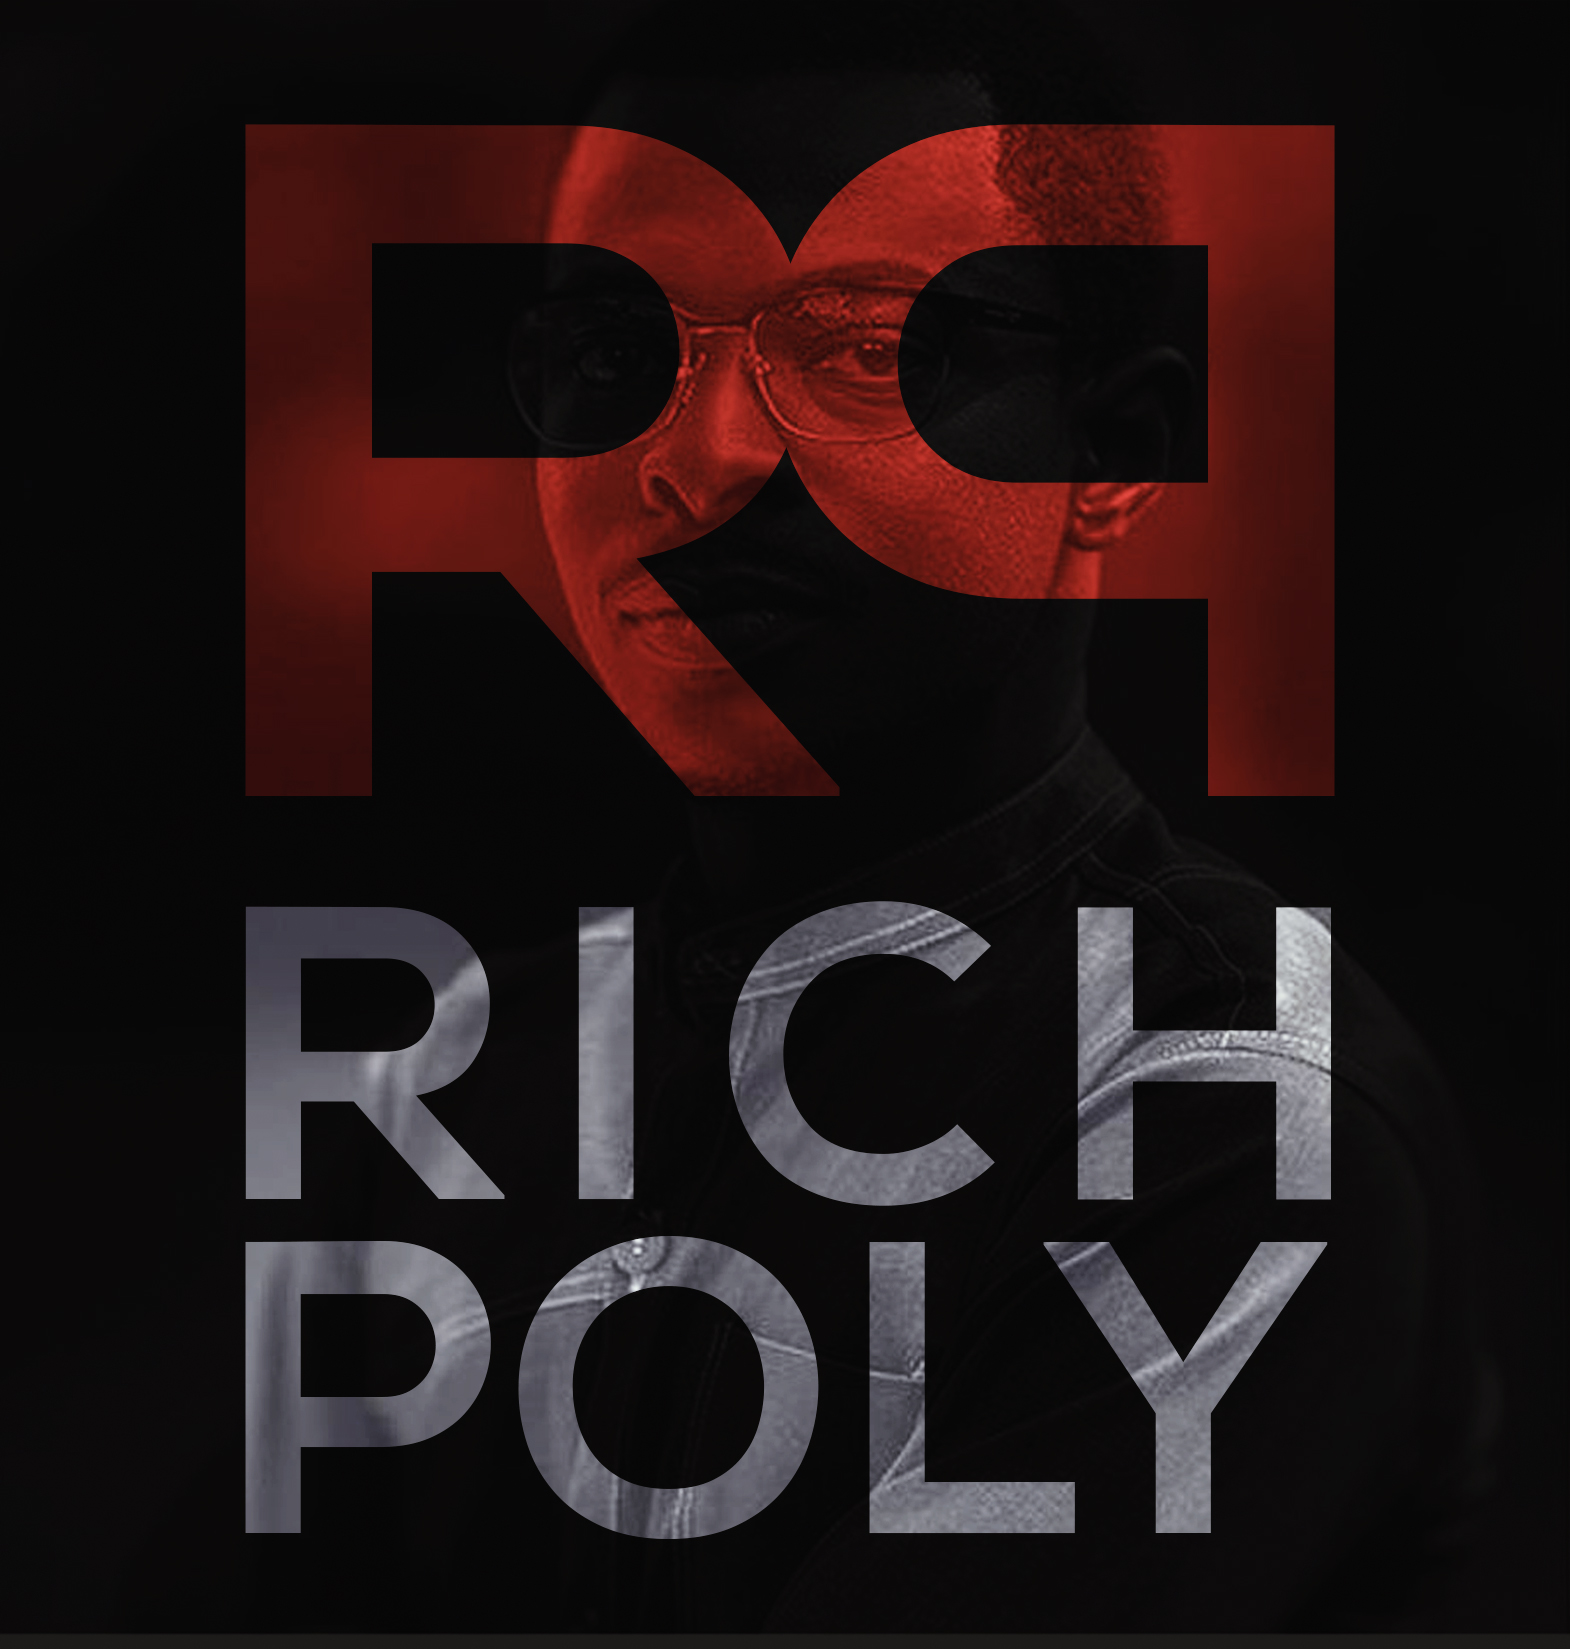 Richpoly Studio